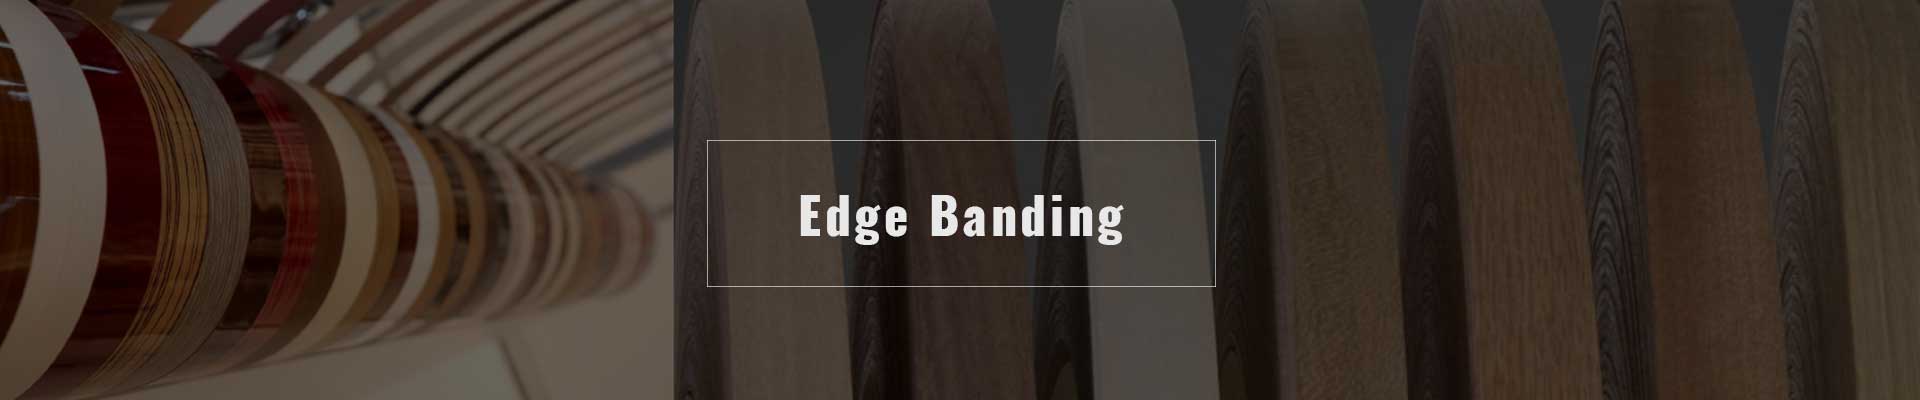 Edge Banding